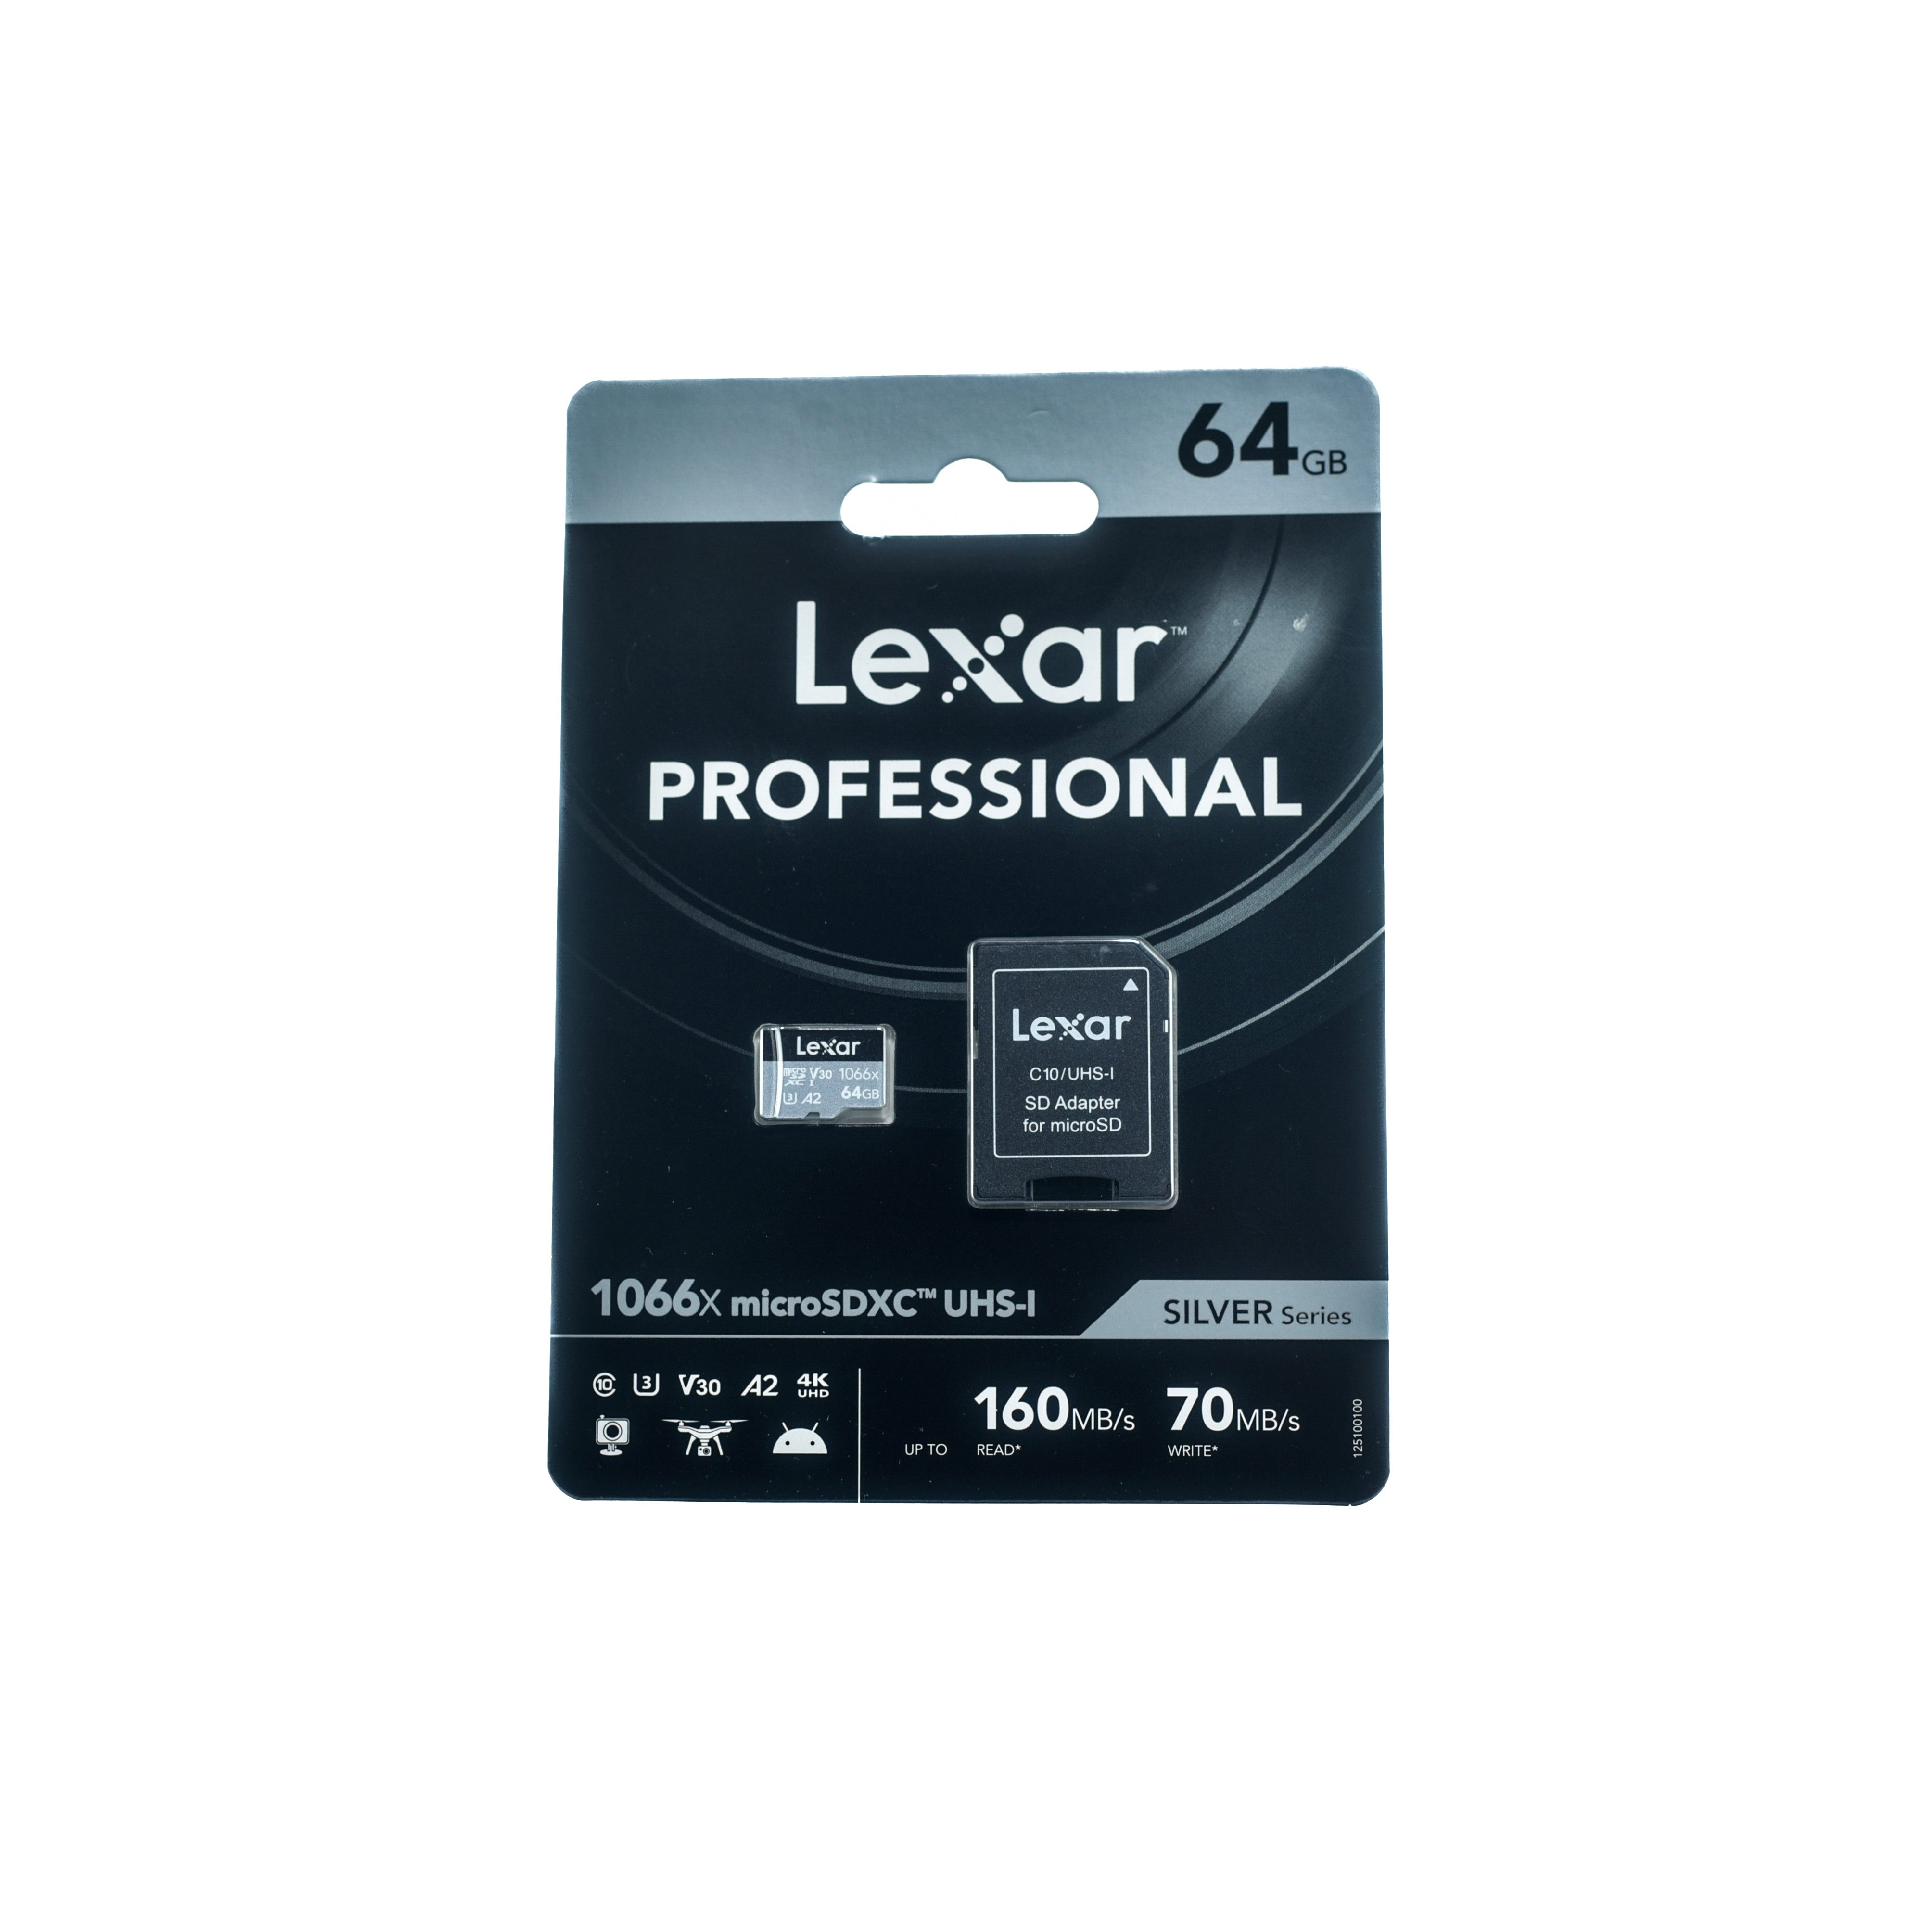 Lexar 64 GB Micro SDXC Card Professional UHS-1 (Silver Series)